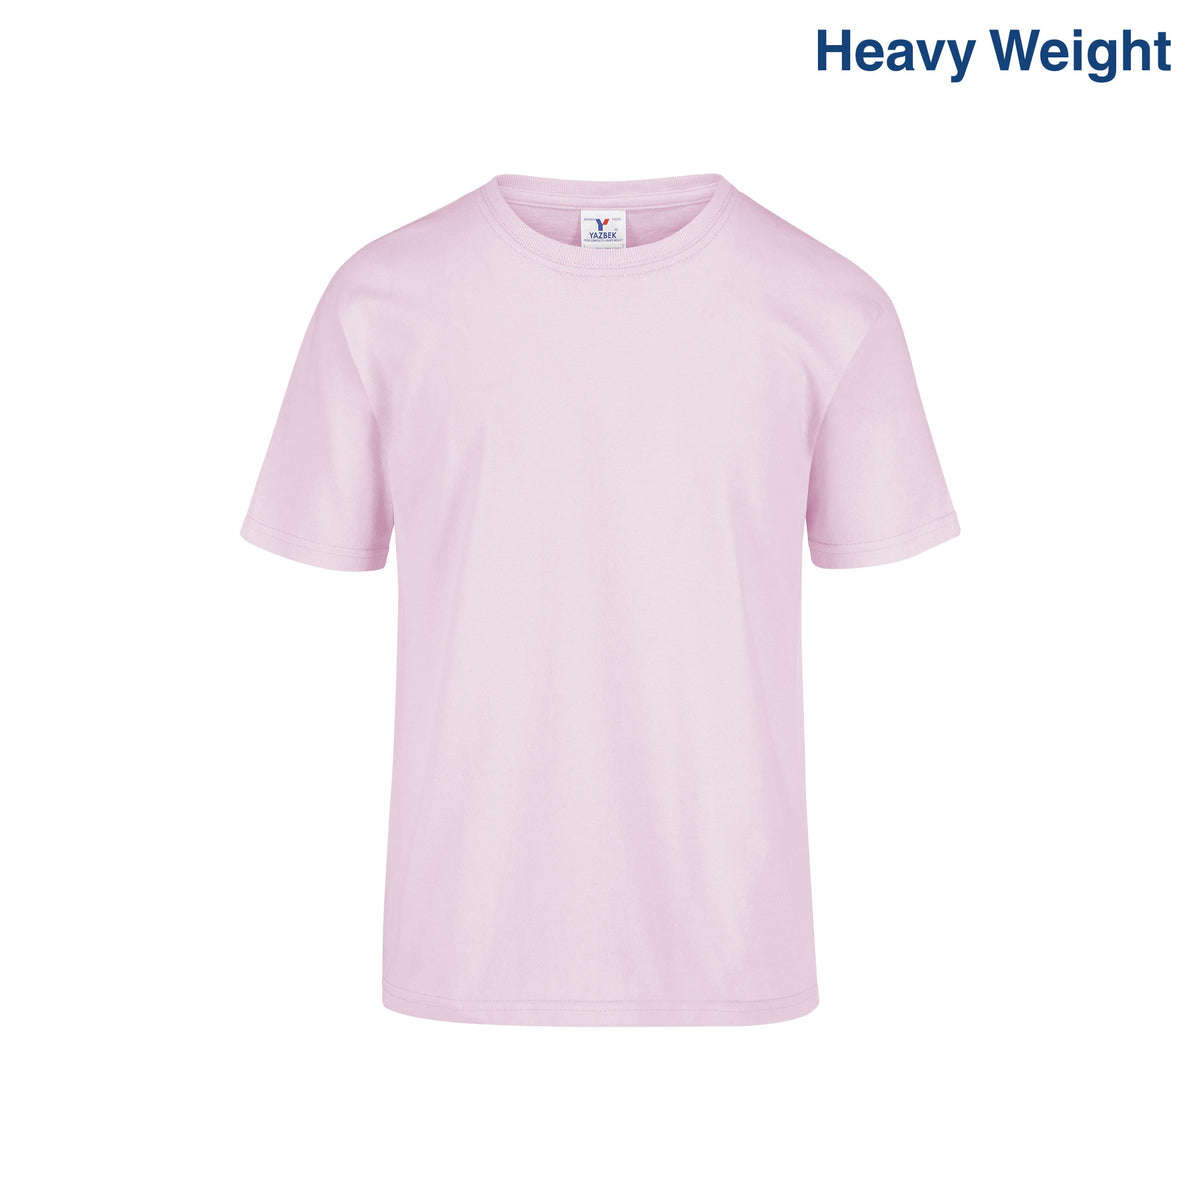 Youth\'s Heavy Weight Crew Neck USA Mint – T-Shirt Pink) Sleeve Yazbek (Light Short